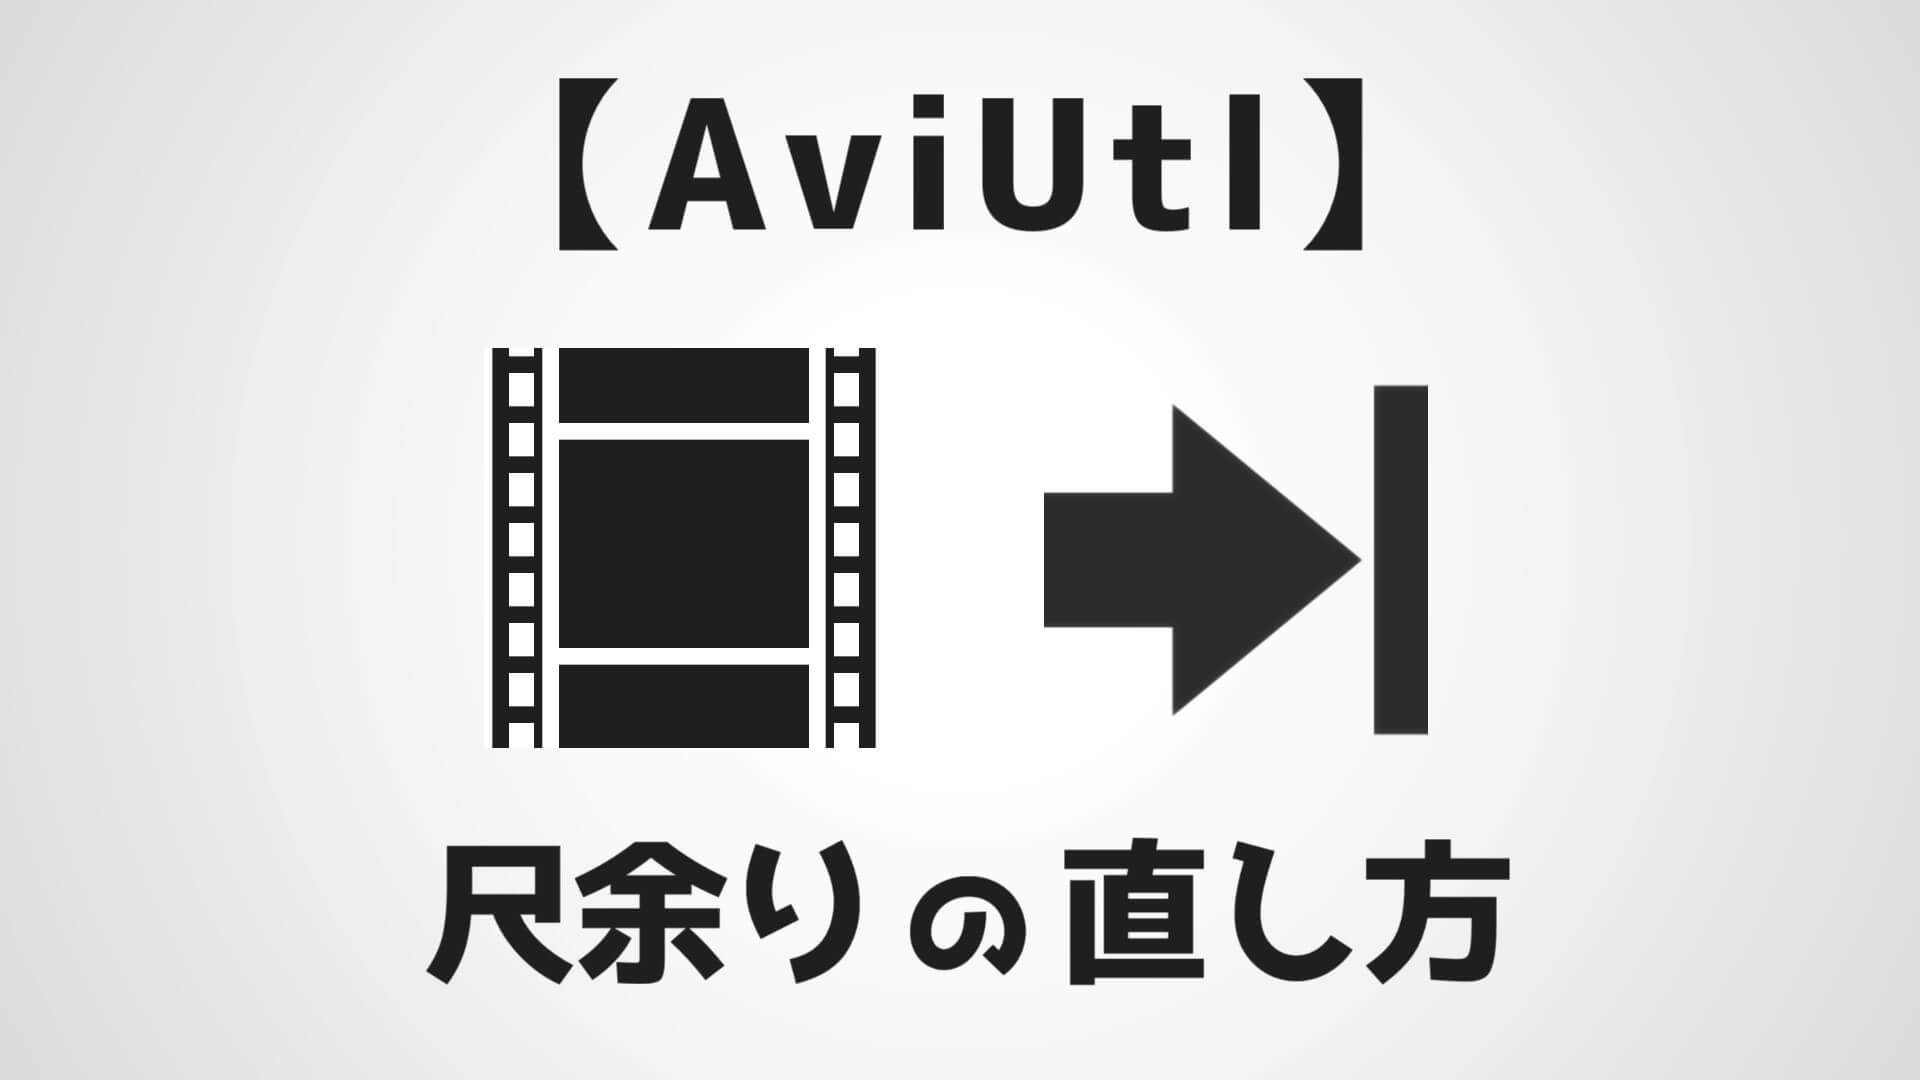 Aviutl 尺余りの解消方法 意図的に尺を伸ばす方法もセットで解説 Aketama Official Blog